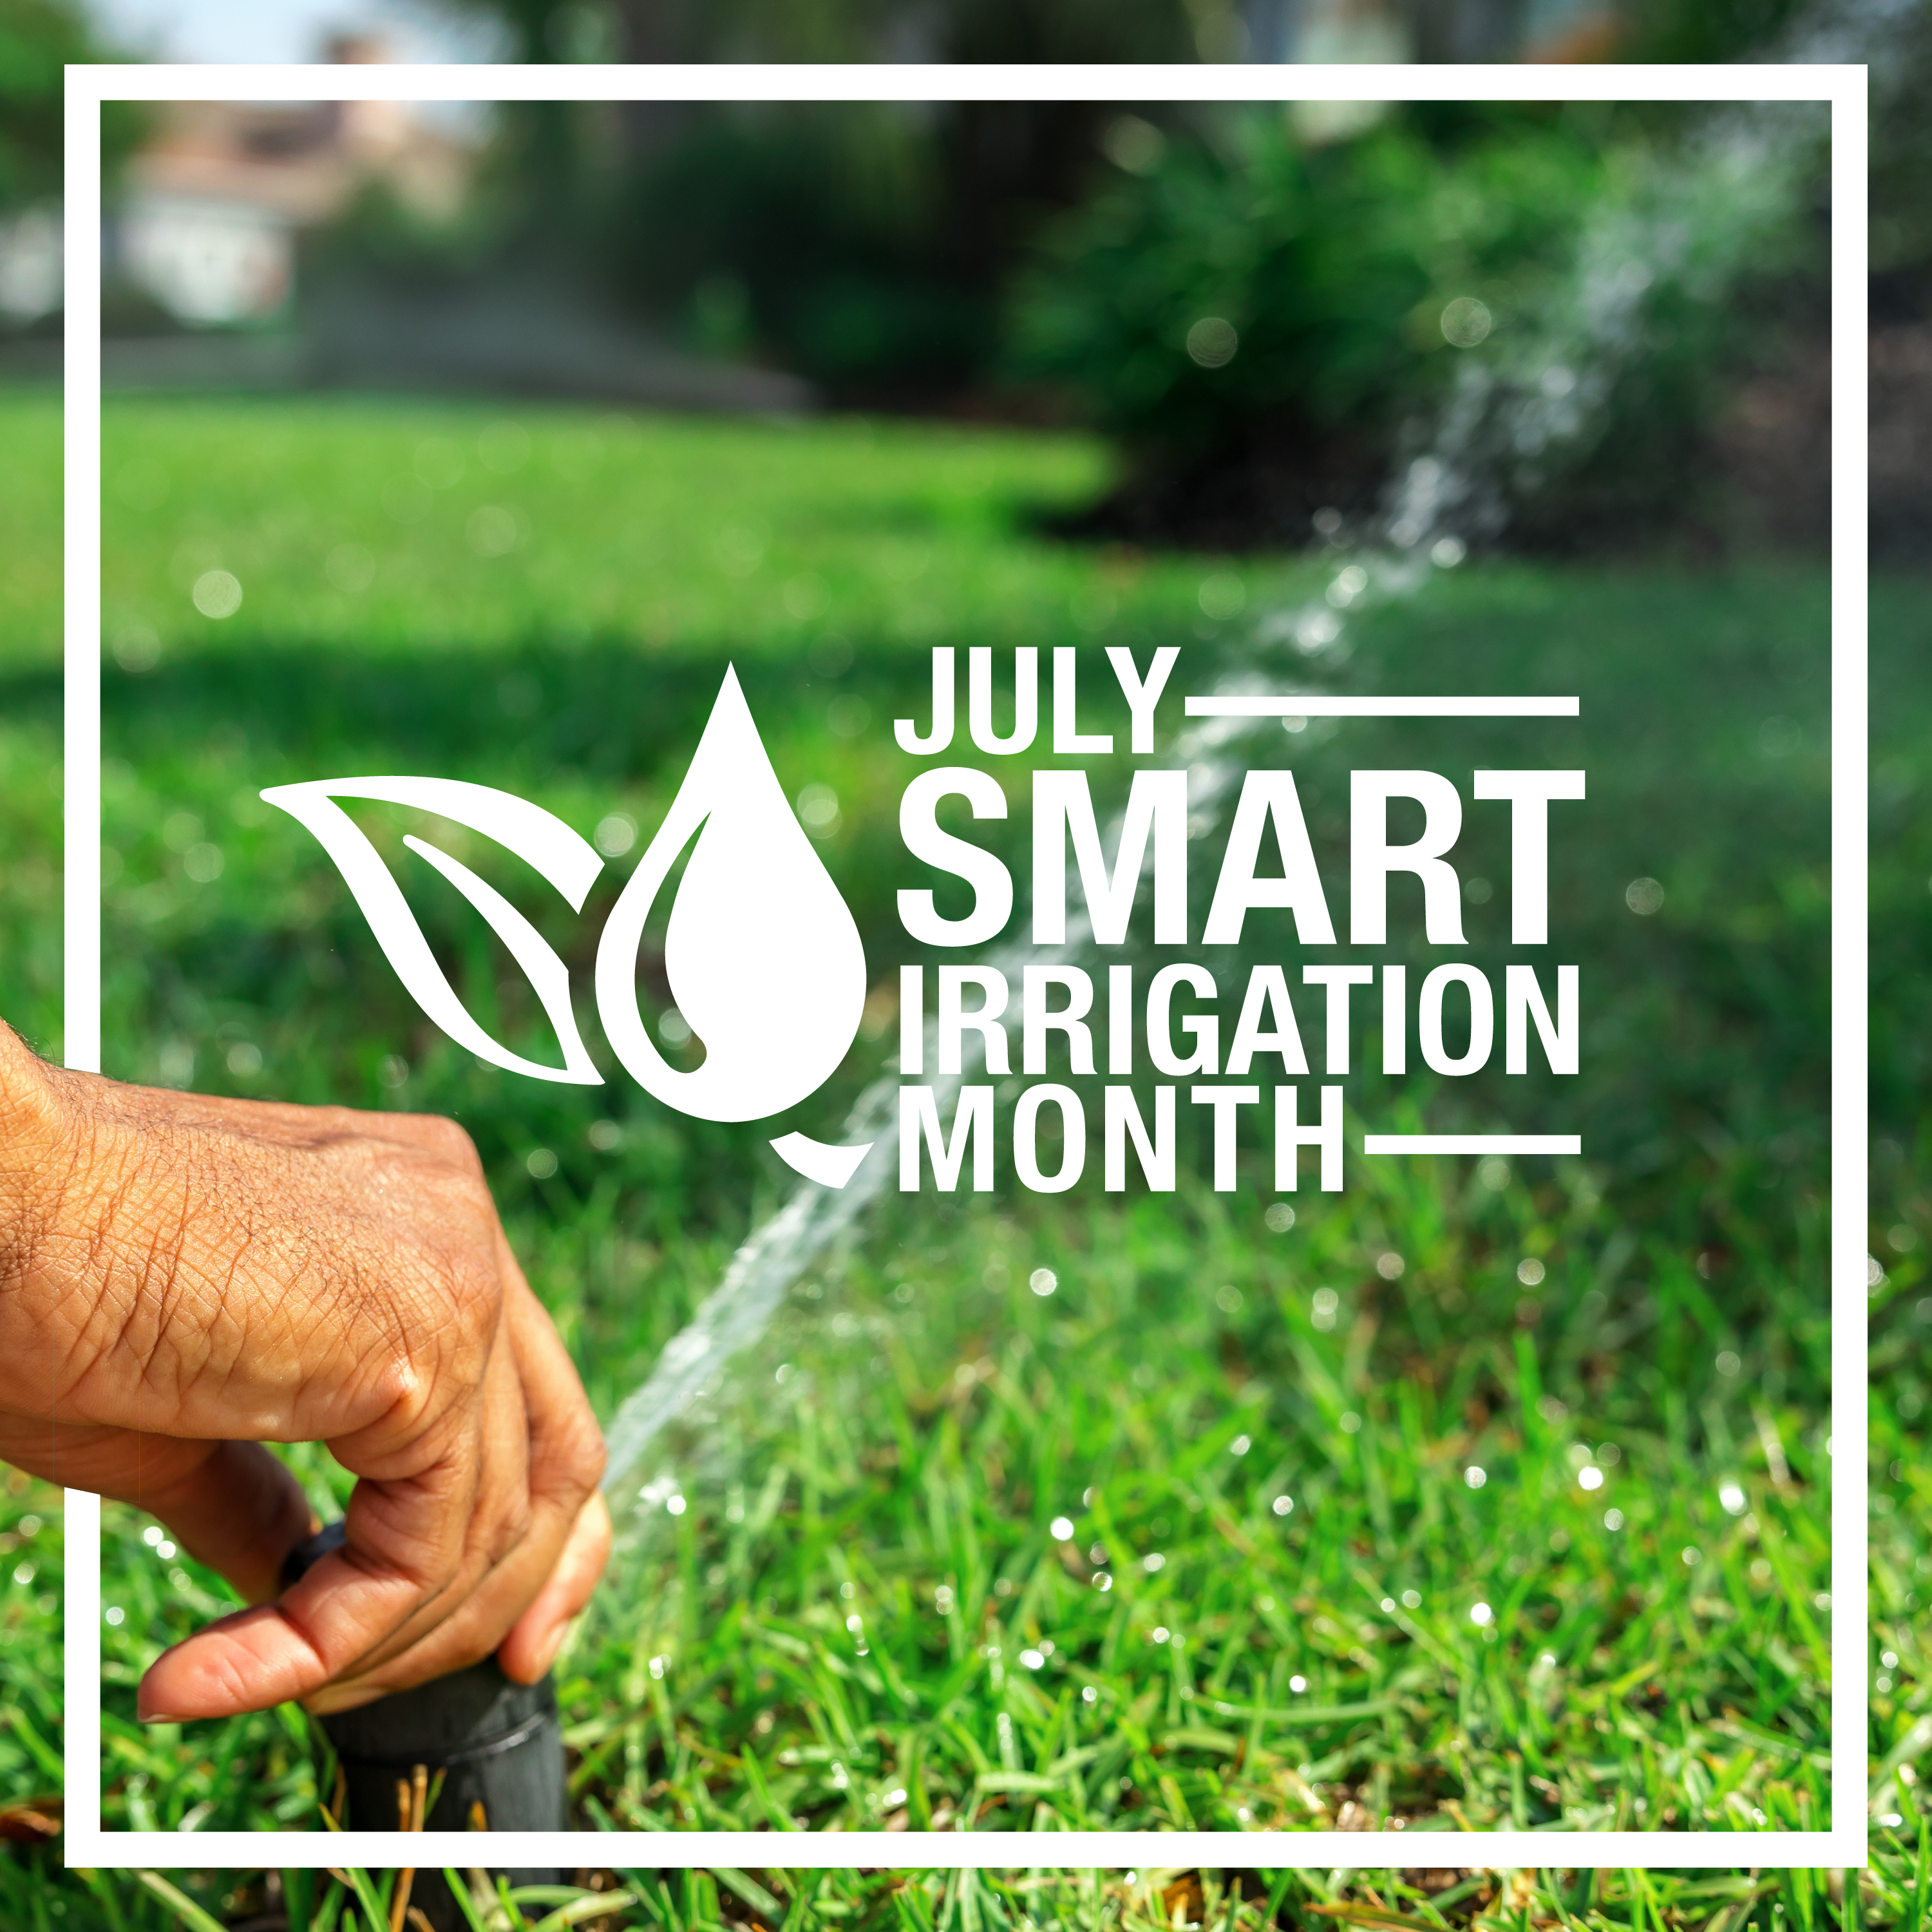 Smart irrigation month